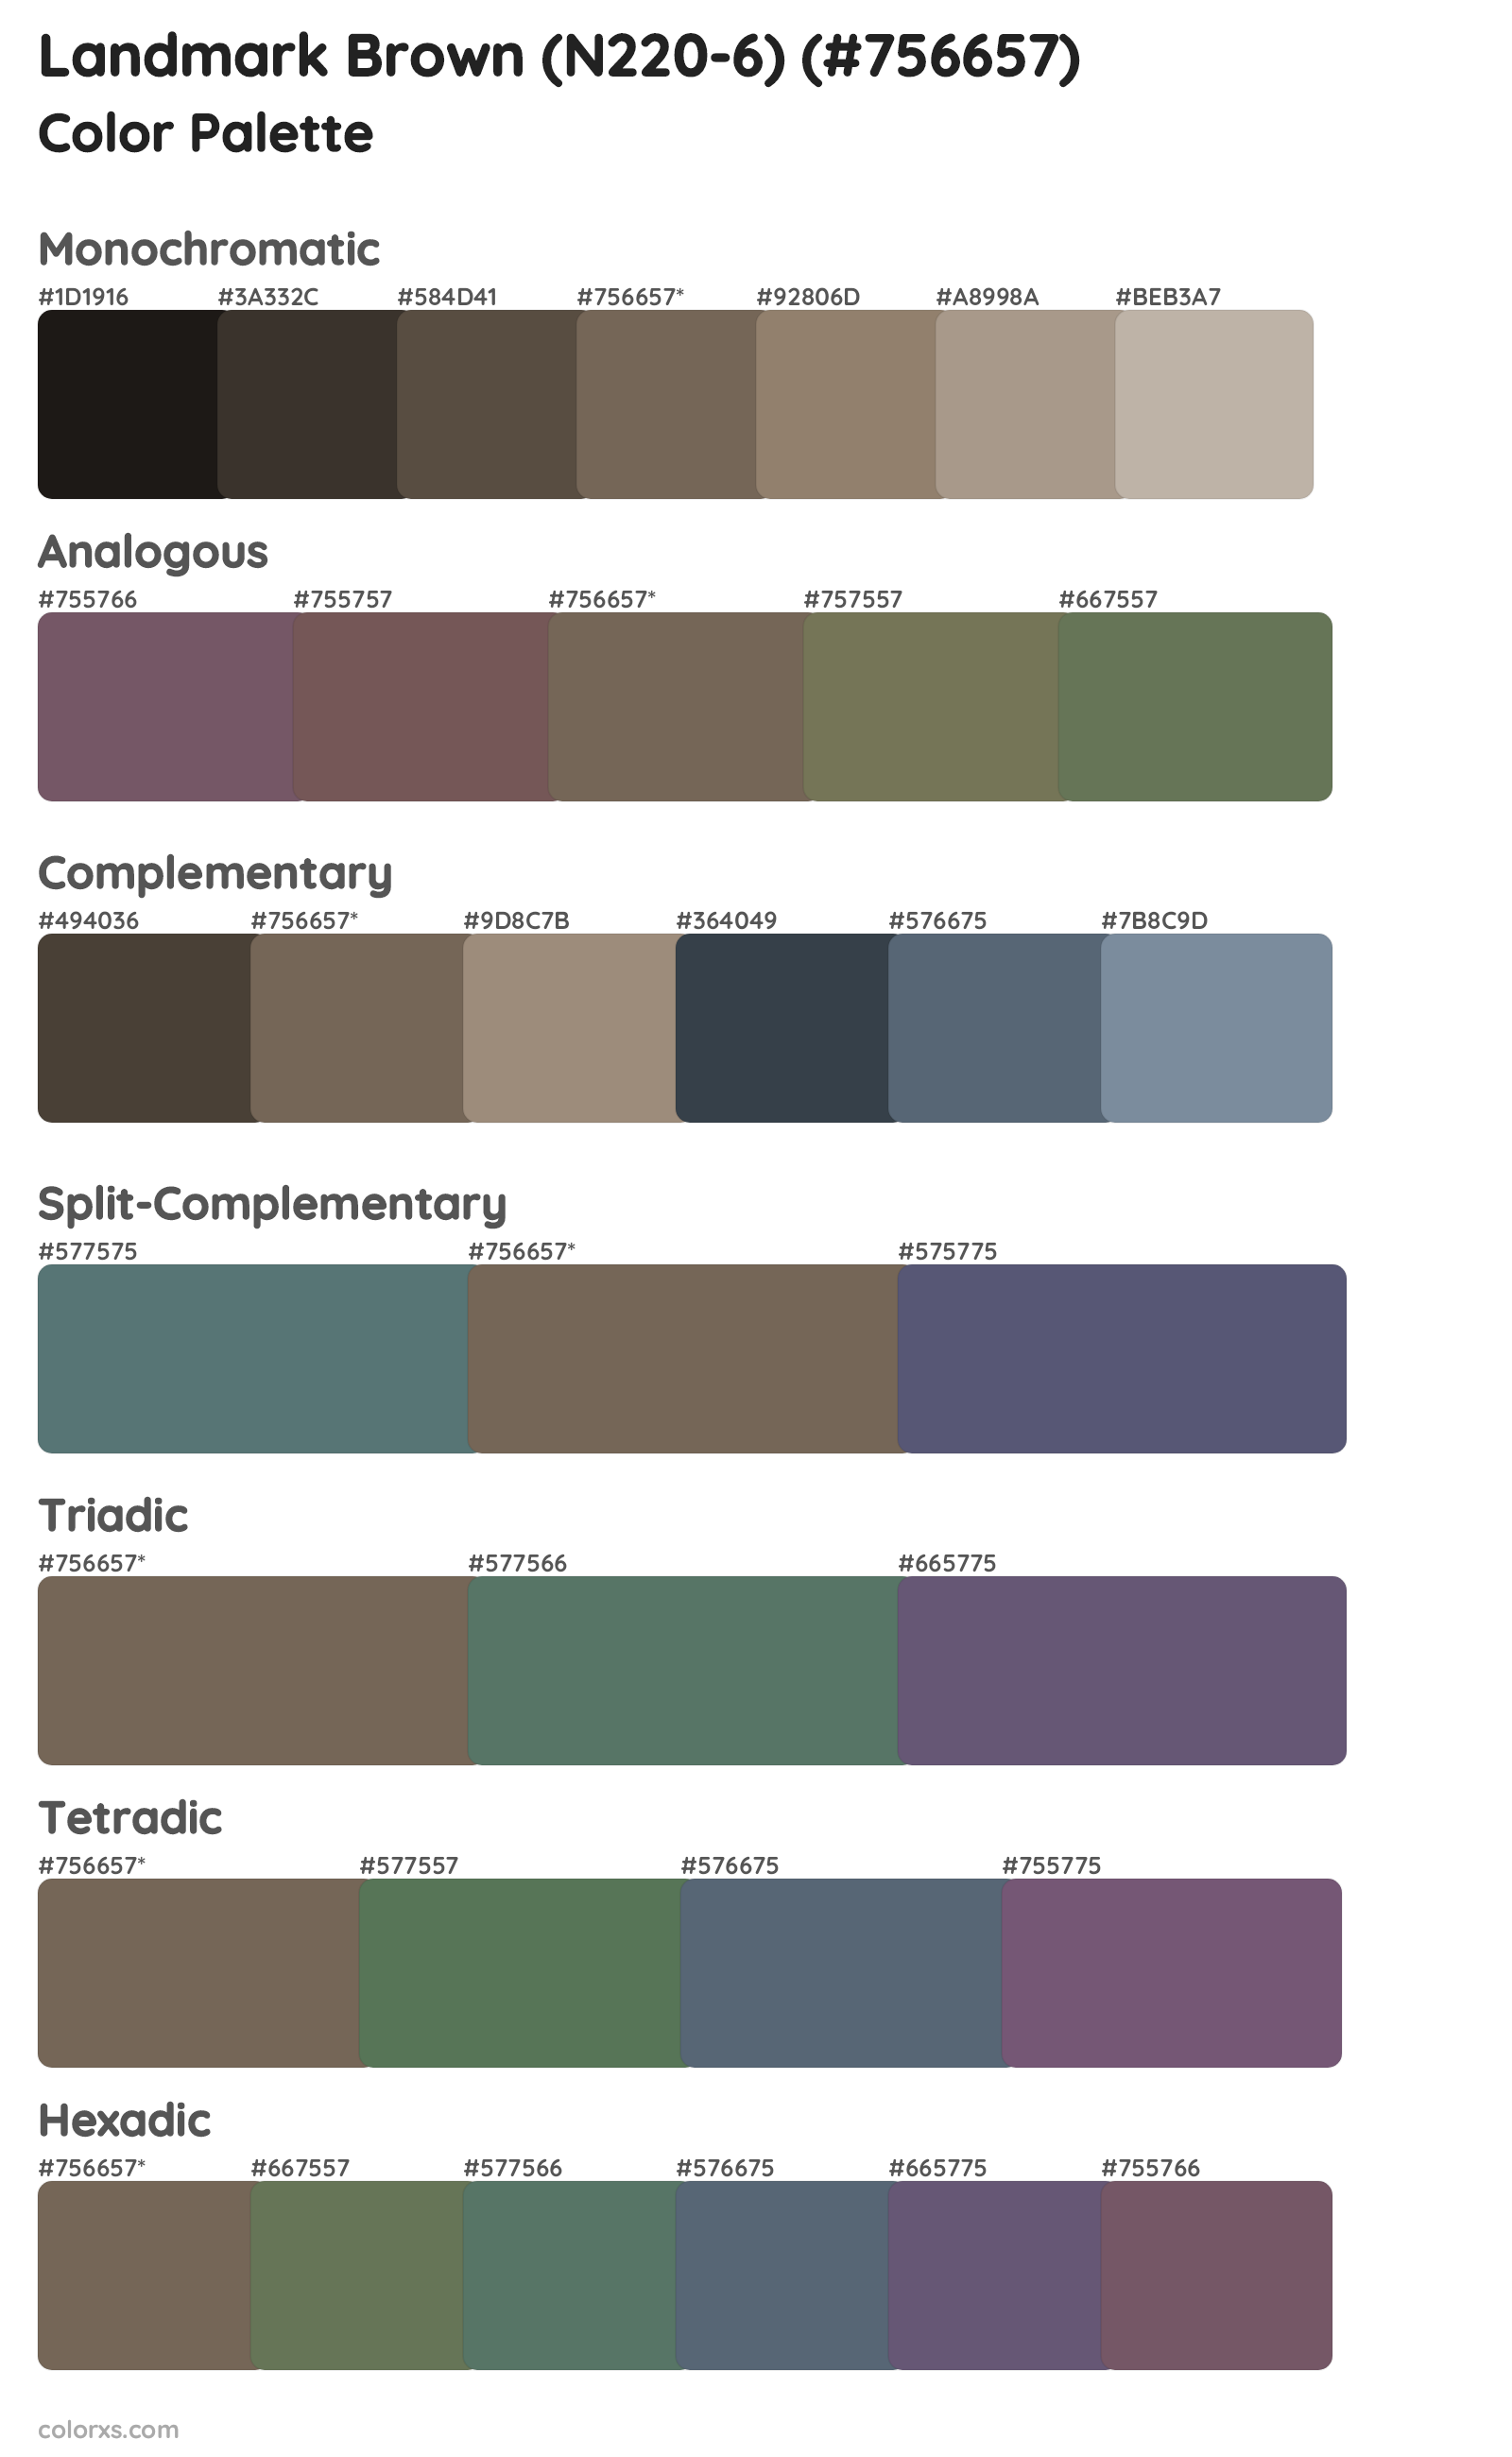 Landmark Brown (N220-6) Color Scheme Palettes